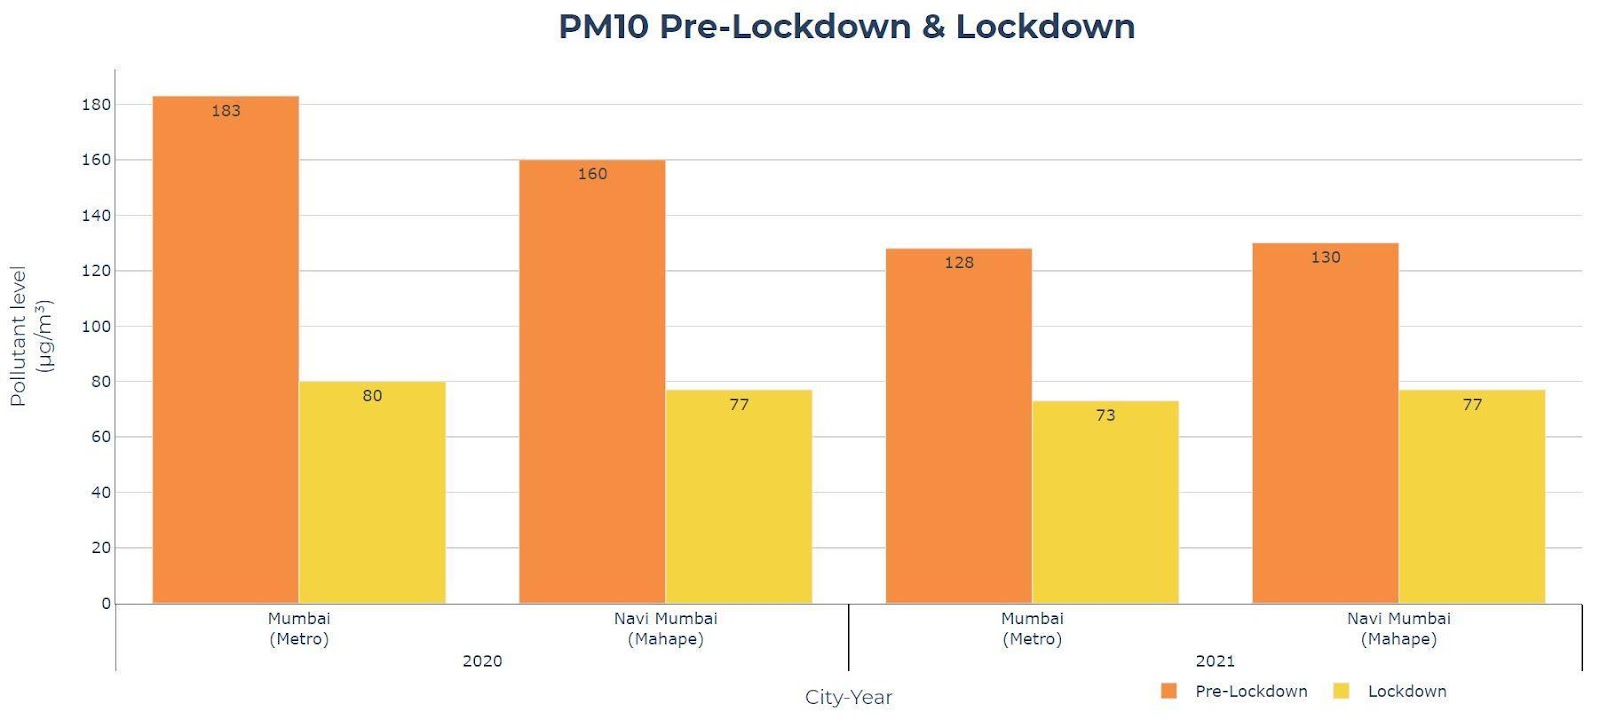 PM10 comparison between Mumbai metro and Mumbai Mahape before and during the lockdown in 2020 and 2021